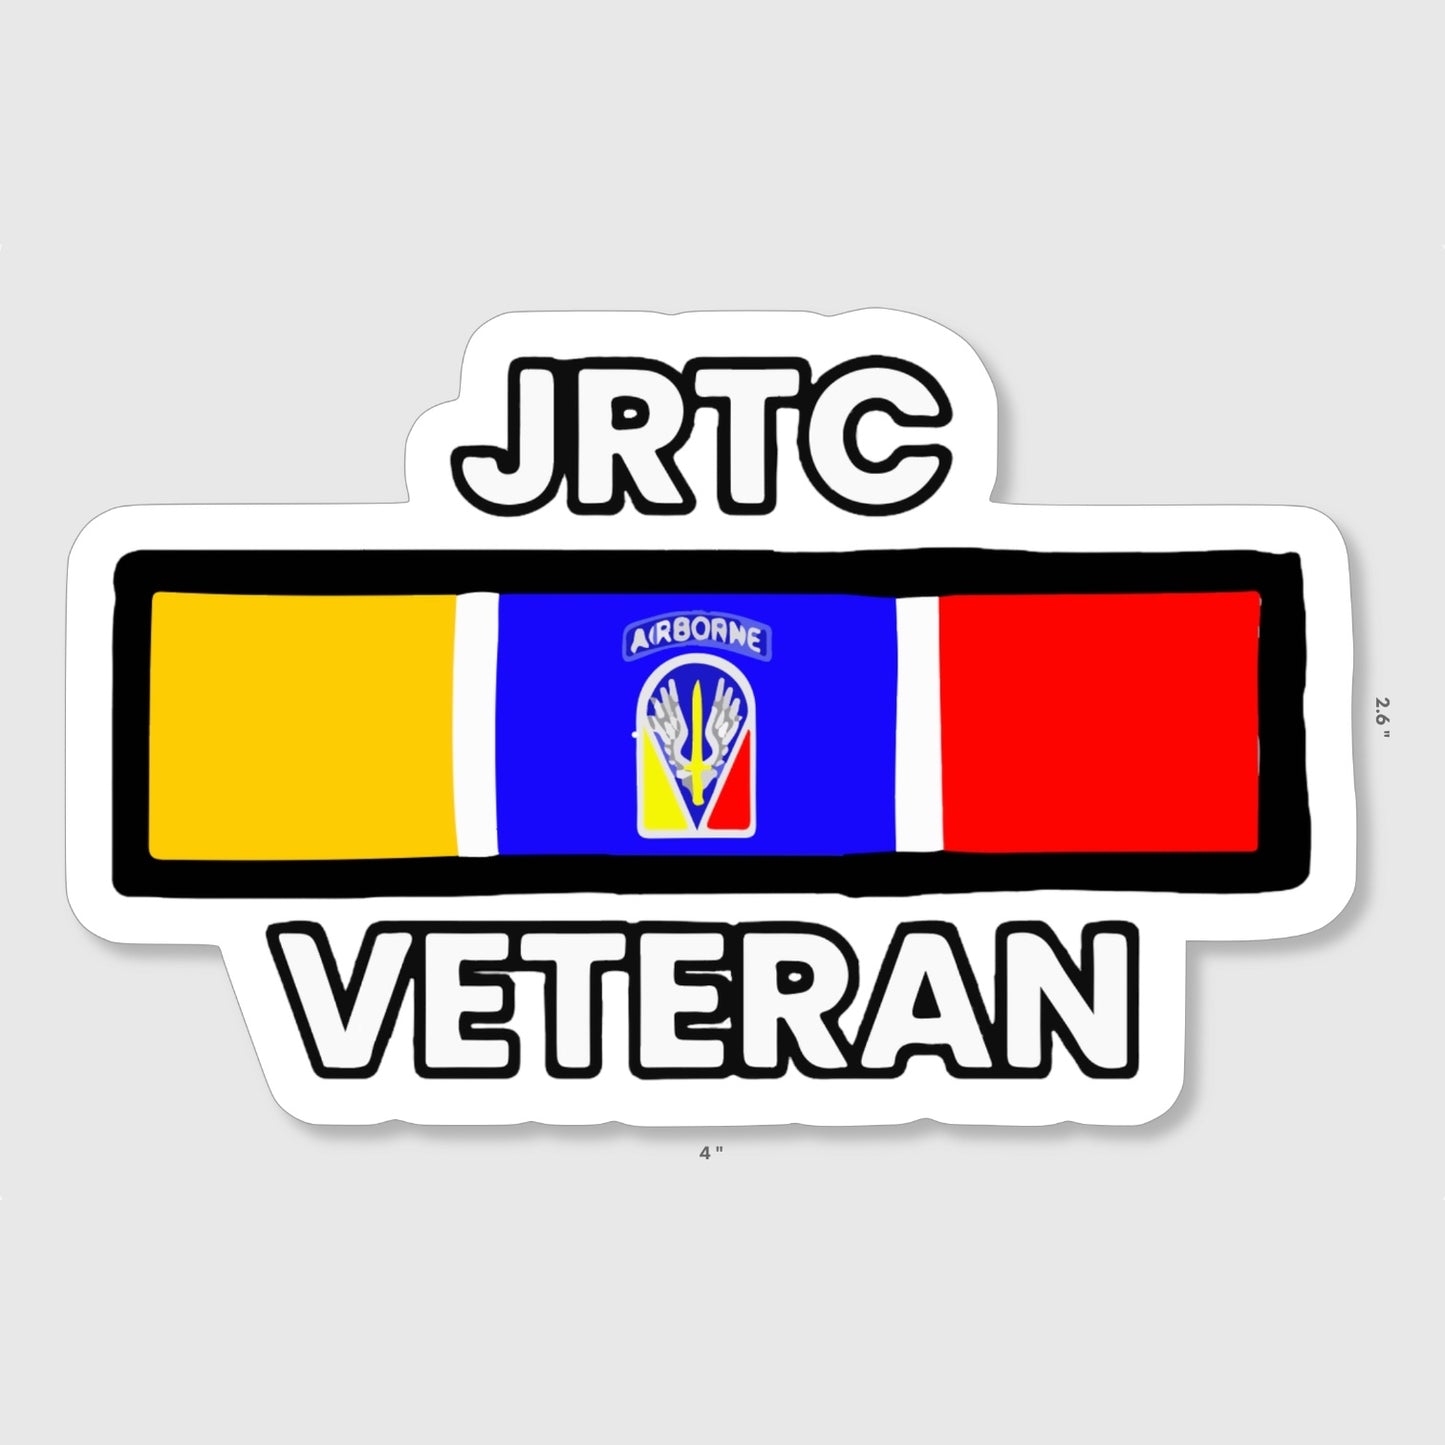 JRTC Veteran Sticker